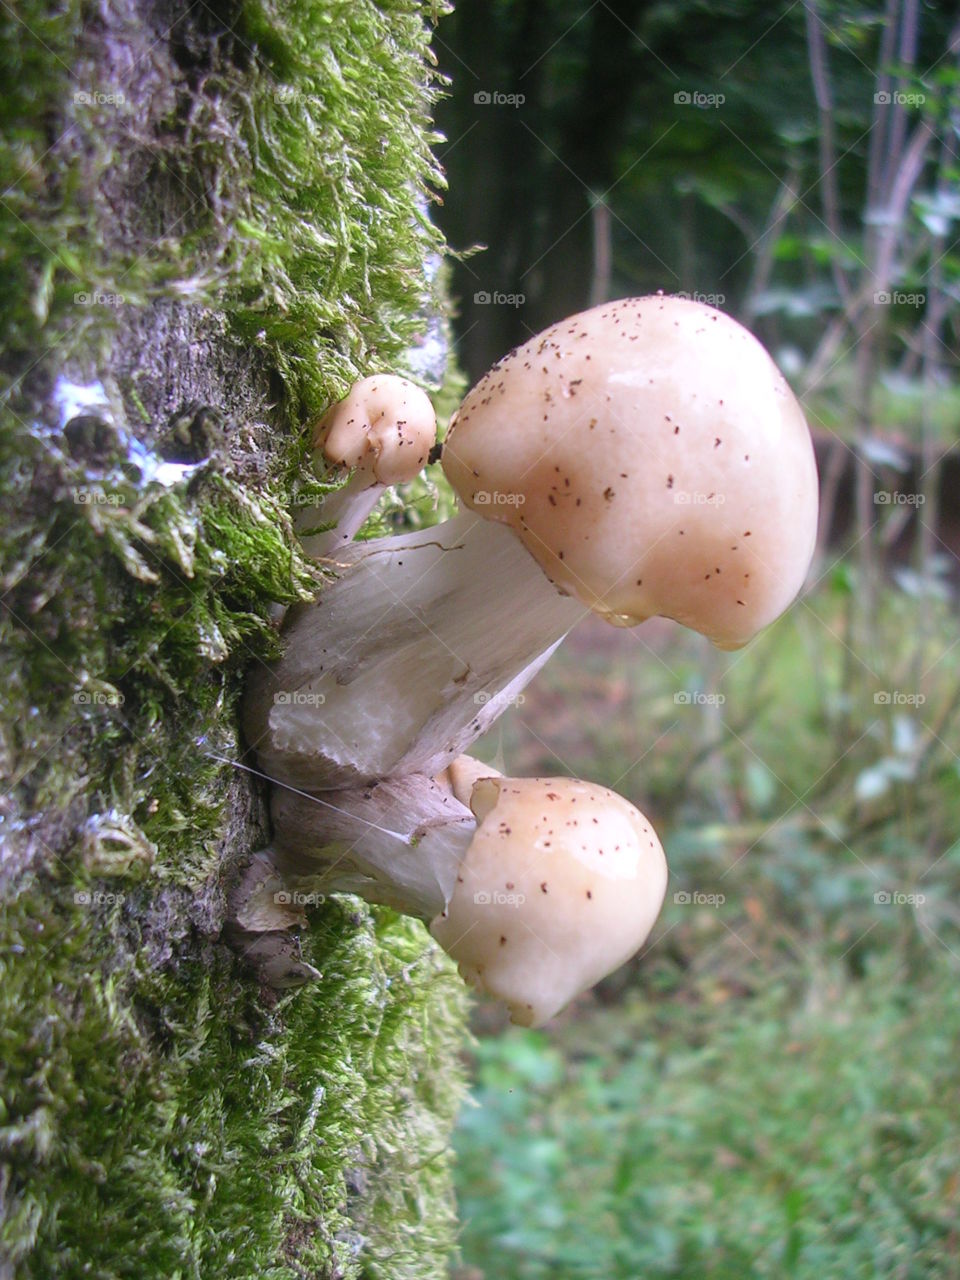 Mushroom Men Two. Fall has fallen, wetter than wet
